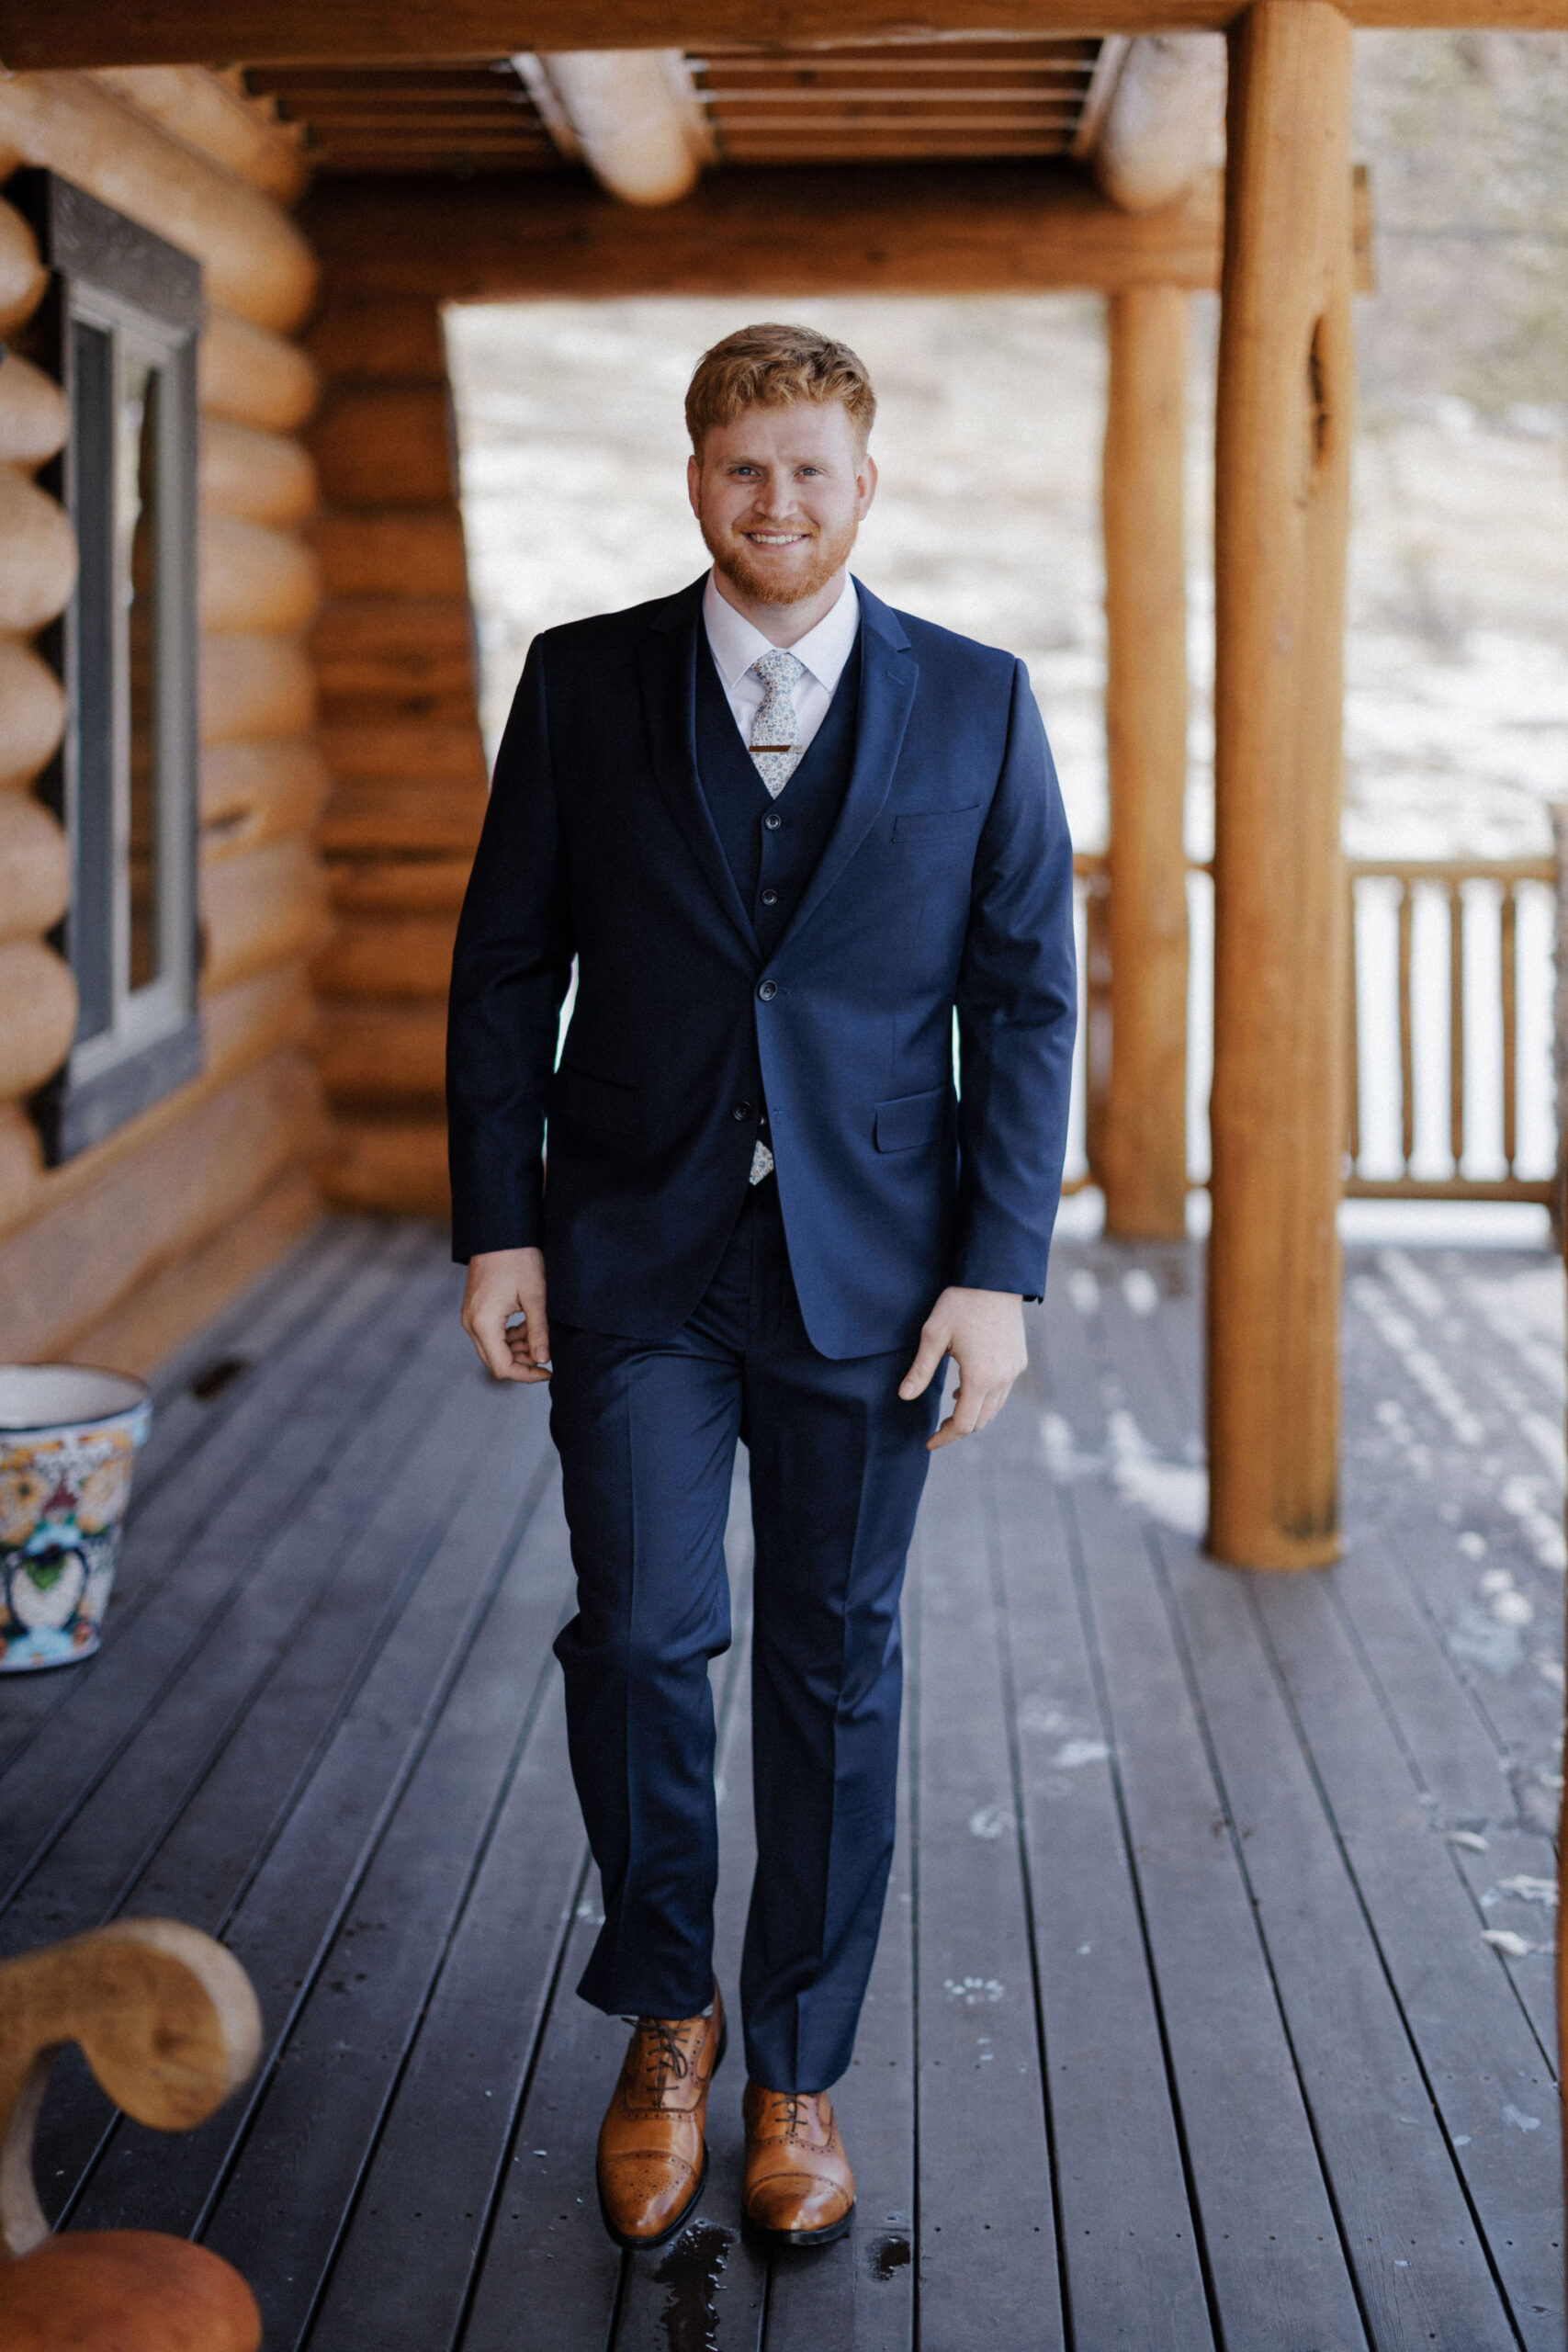 groom walks around airbnb during wedding photos with photographer